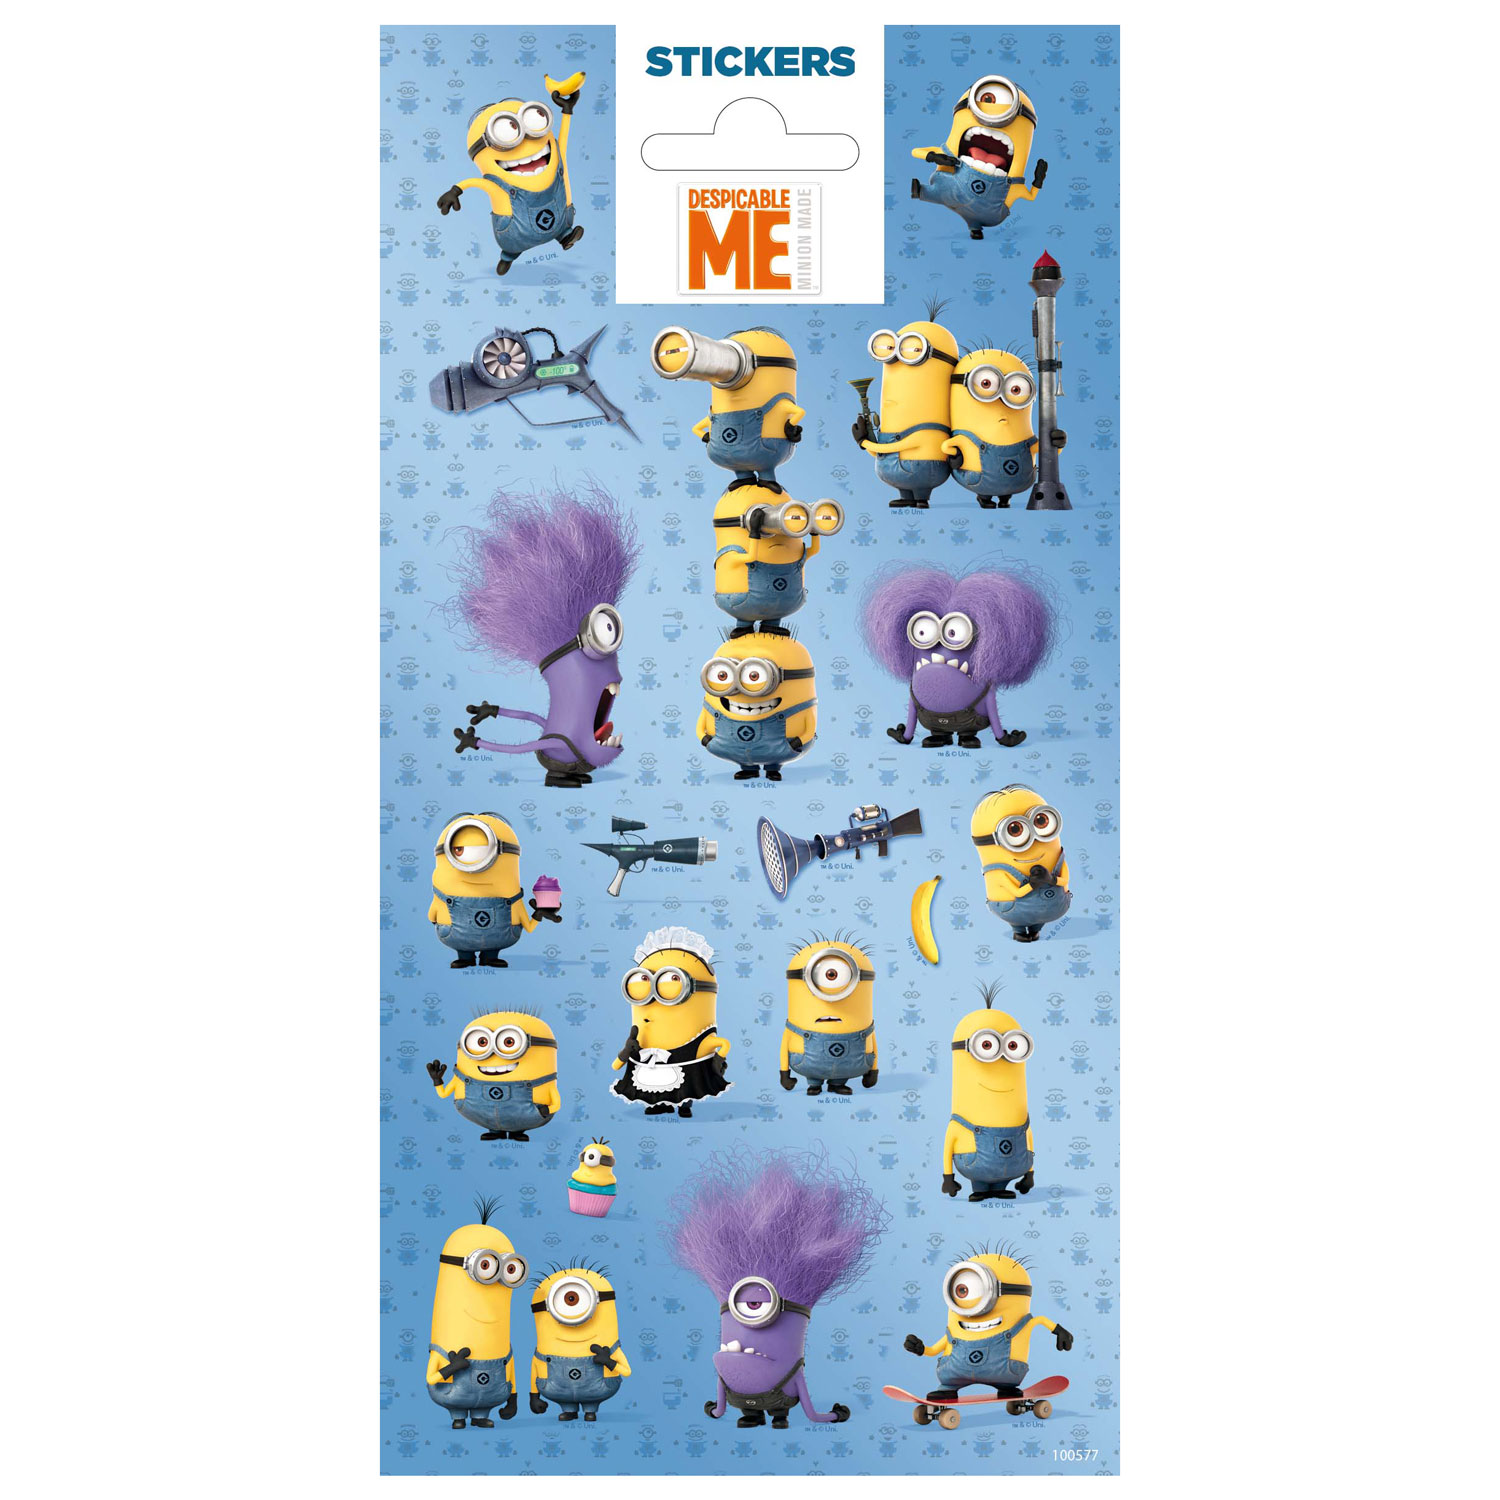 Minions Sticker Wholesale sticker supplier - Wholesale Stickers